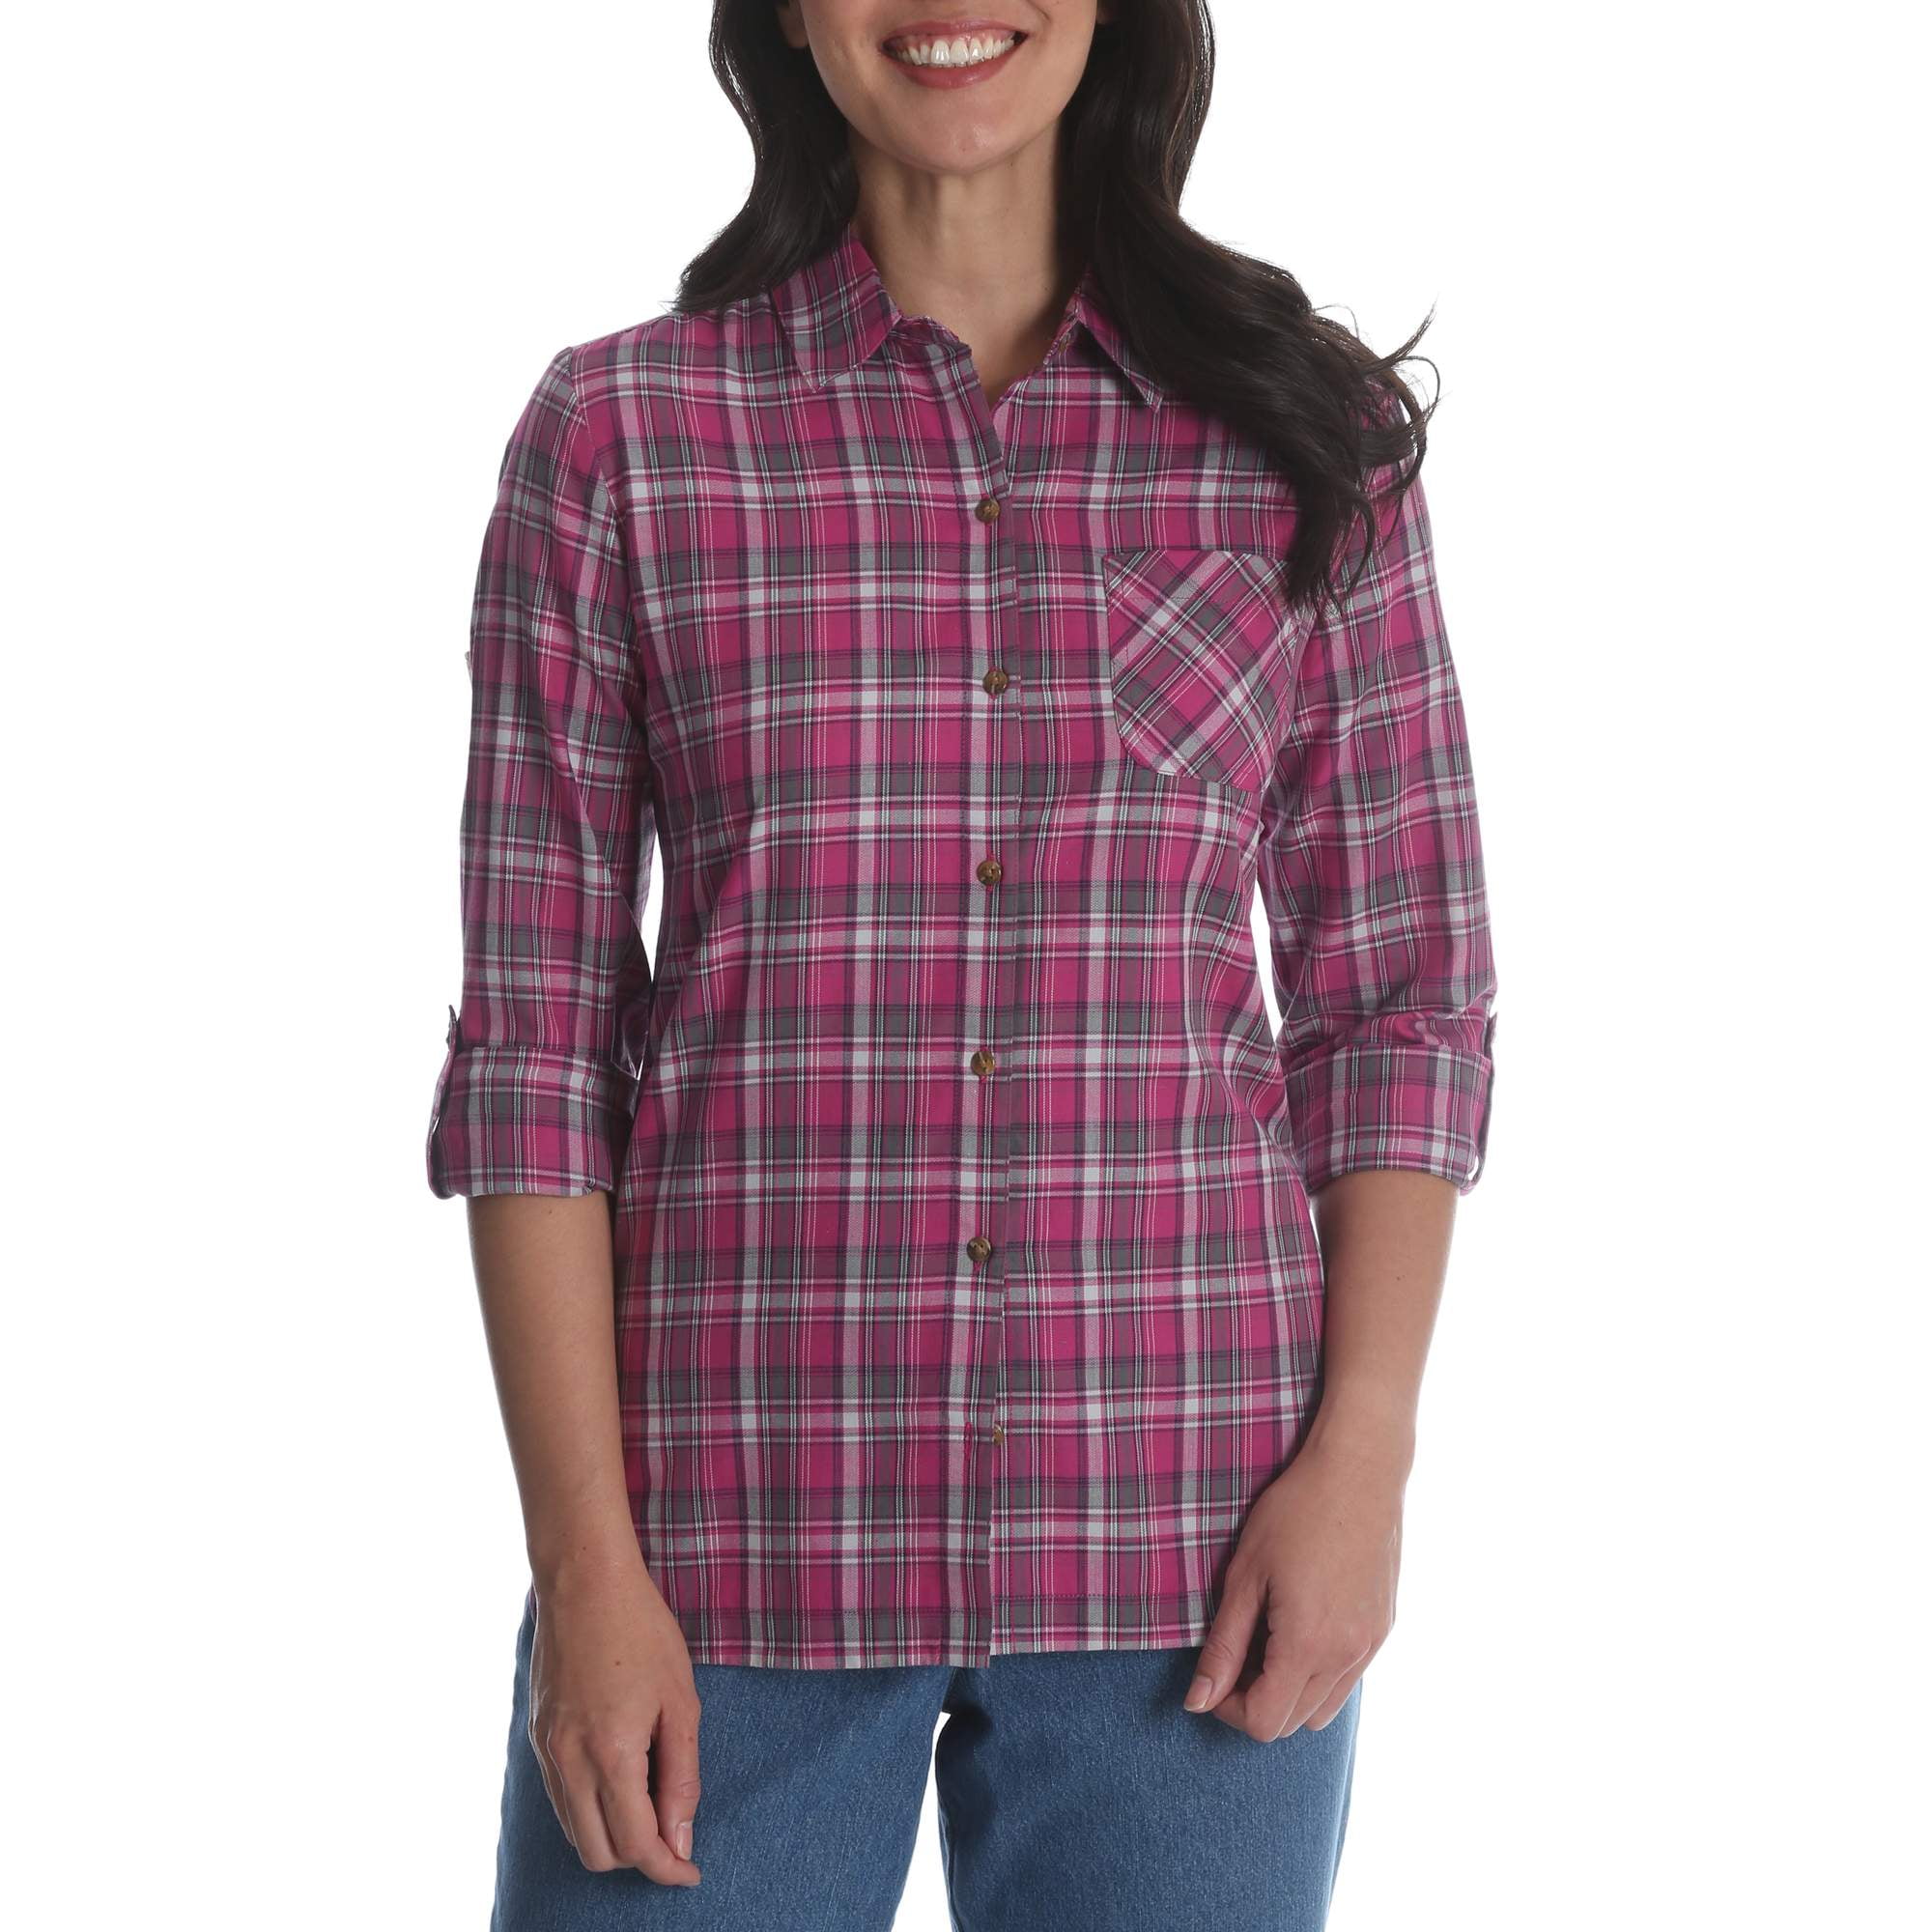 Chic - Women's Comfort Collection Classic Plaid Shirt - Walmart.com ...